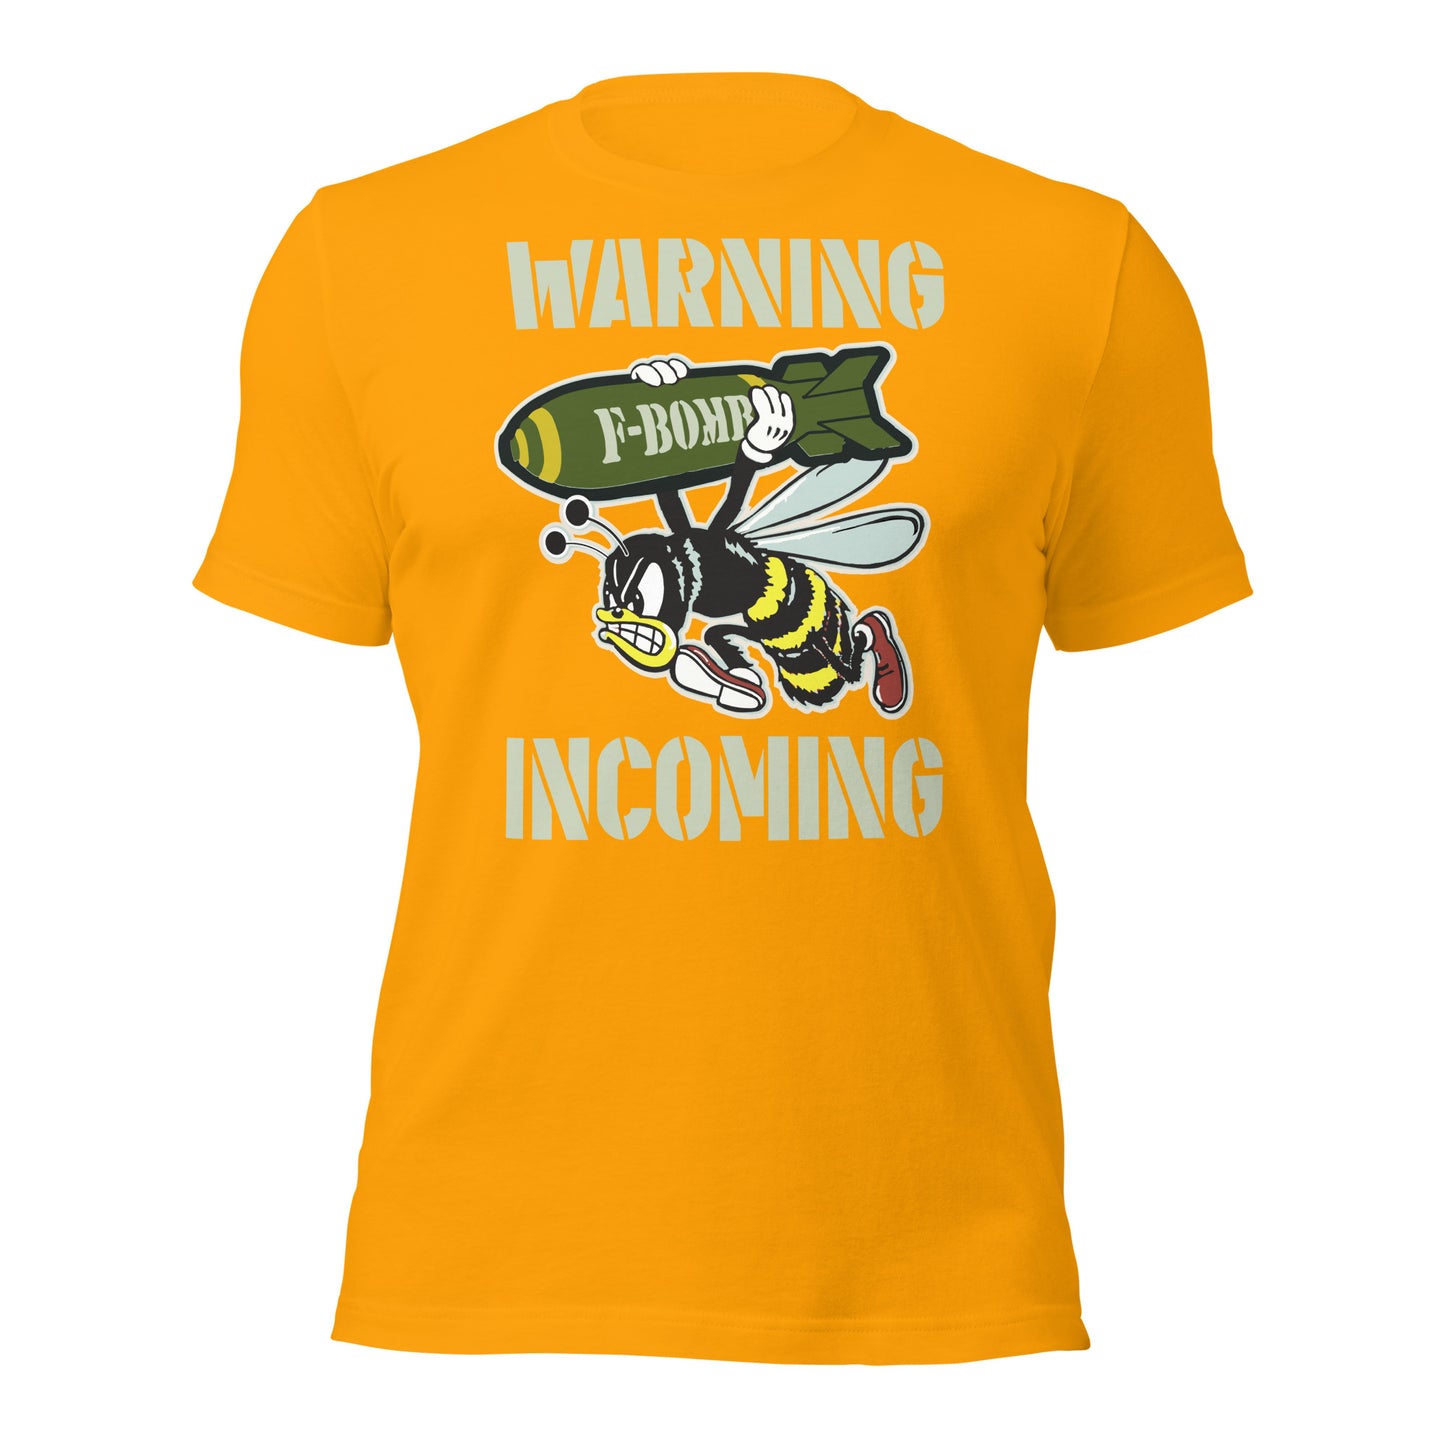 WARNING F-BOMB INCOMING - BELLA+CANVAS - Unisex t-shirt